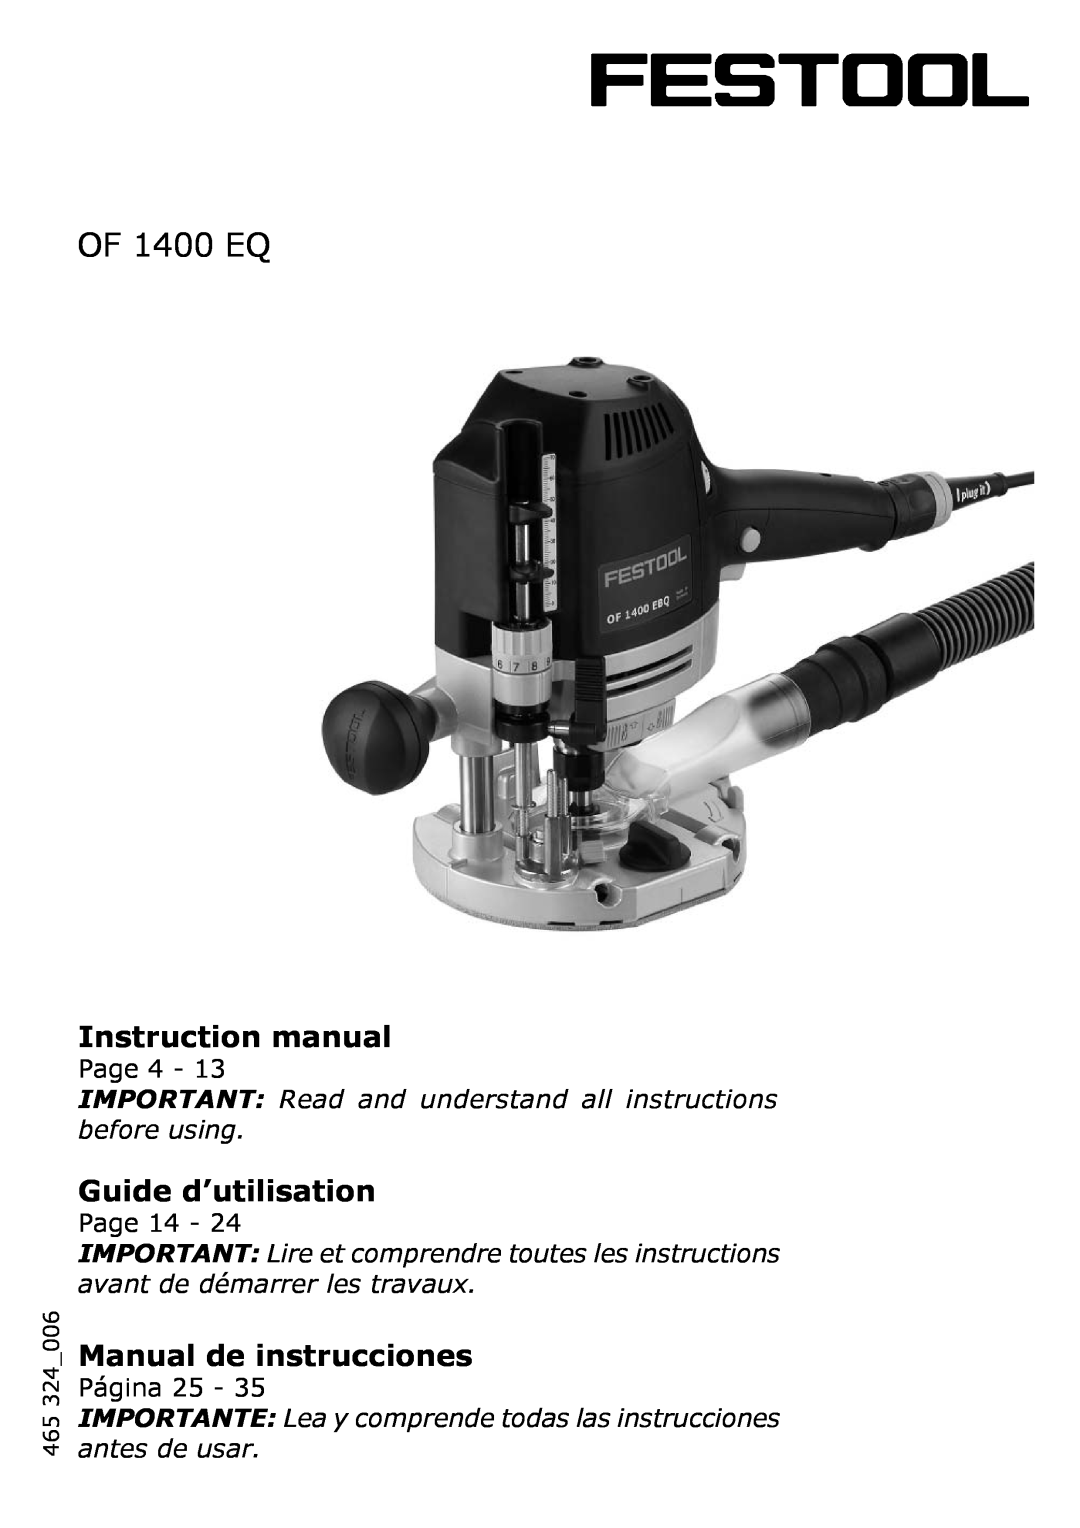 Festool PN574342 instruction manual Instruction manual, Guide d’utilisation, Manual de instrucciones, OF 1400 EQ, Page 4 